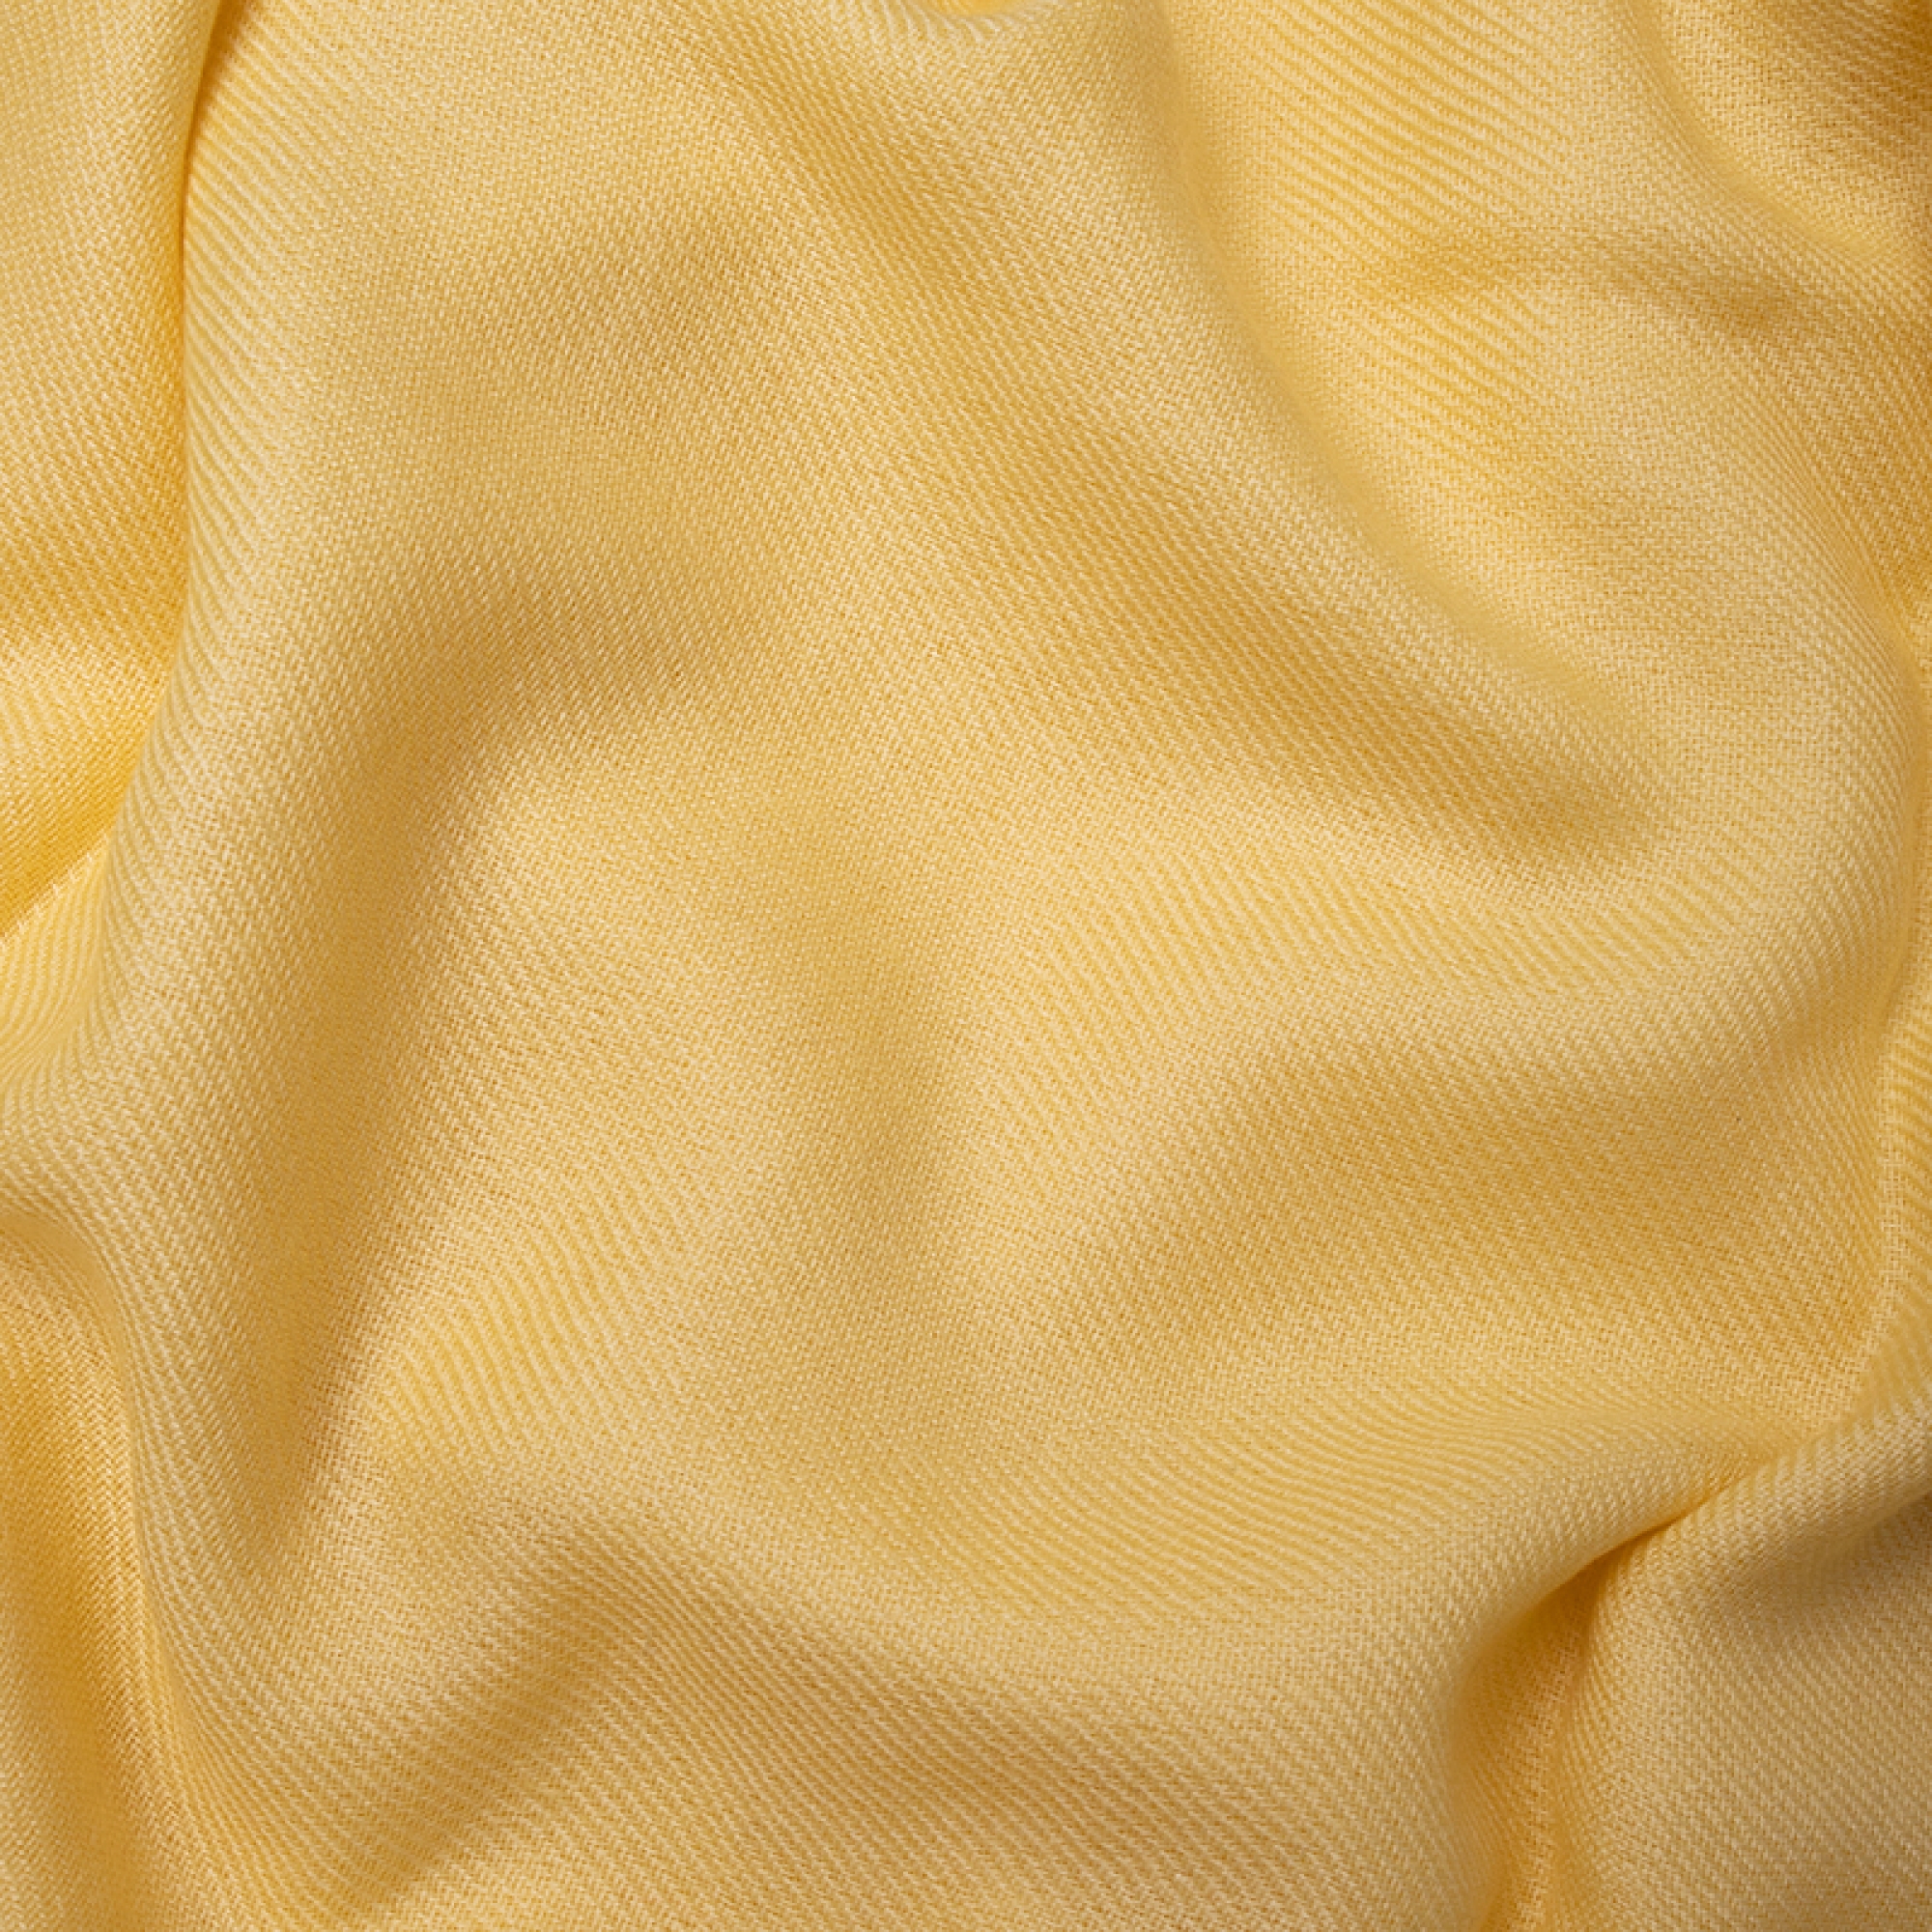 Cachemire pull homme toodoo plain l 220 x 220 jaune pastel 220x220cm